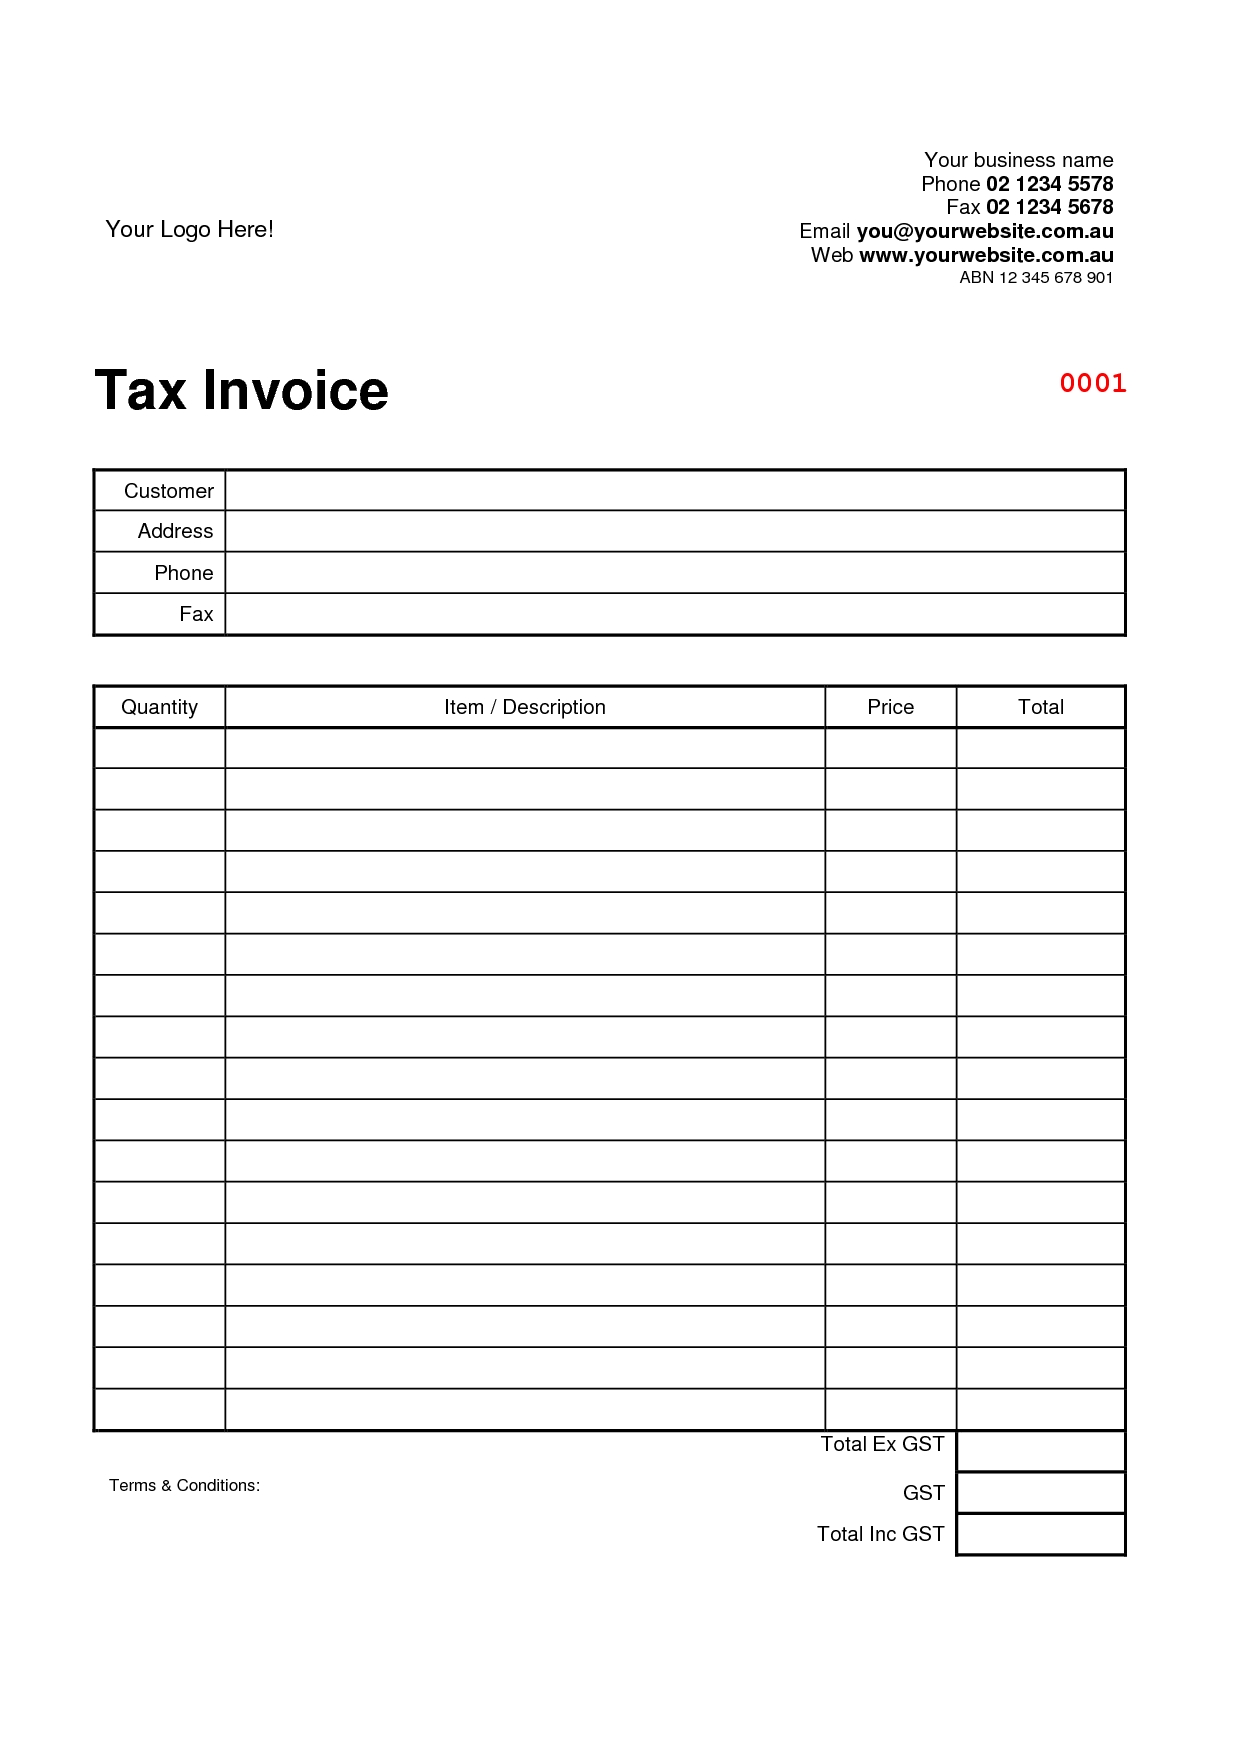 australian tax invoice template excel invoice example tax invoice excel template